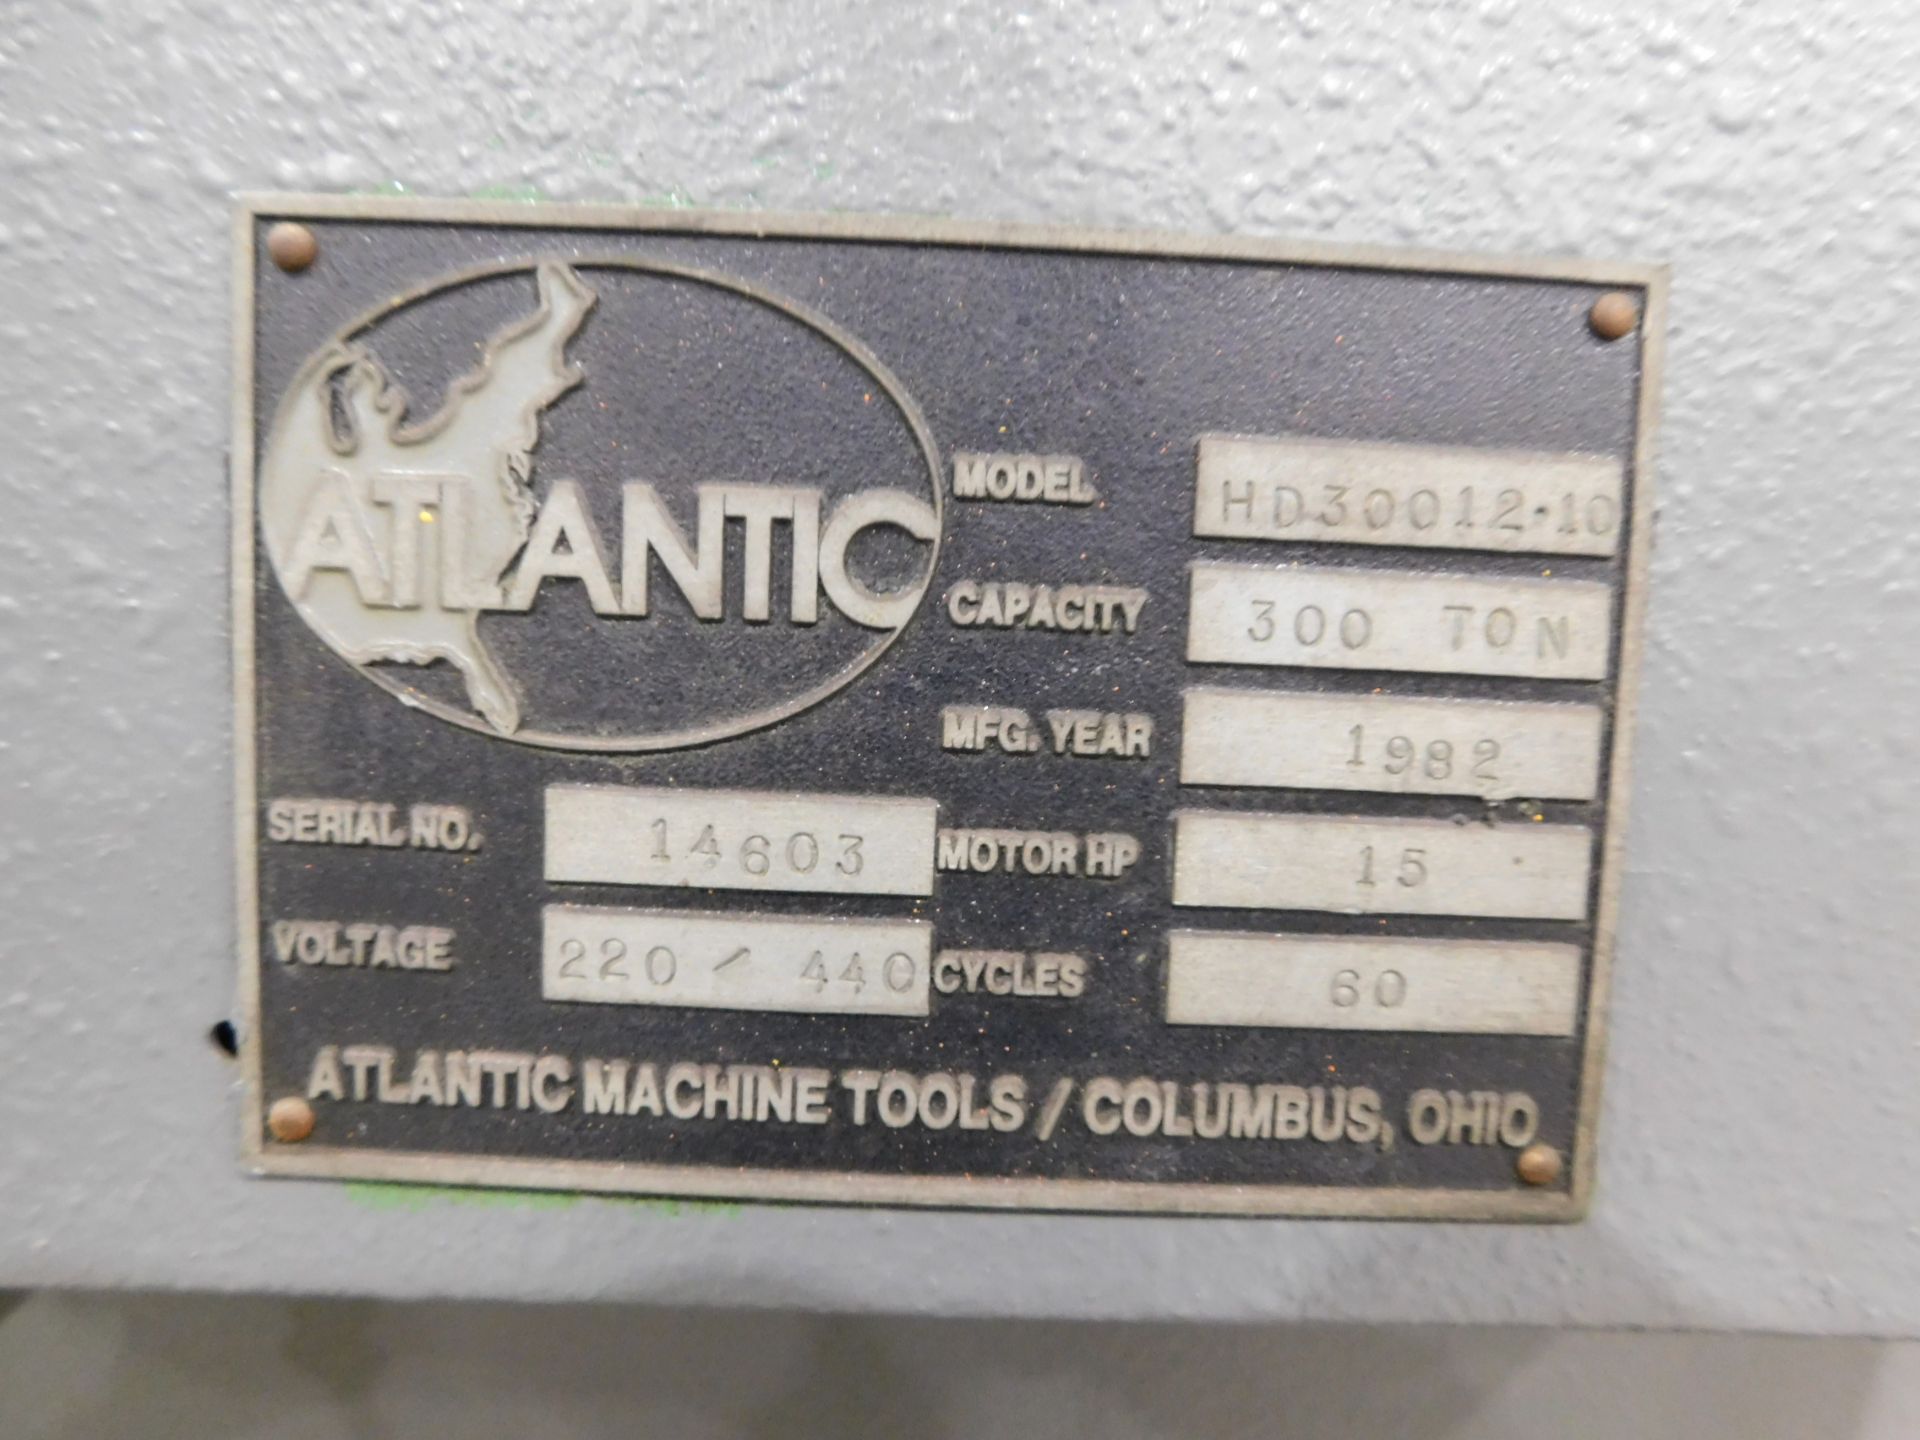 Atlantic Model HD30012-10 Hydraulic Press Brake, s/n 14603, New 1982, 300 Ton, 12’ Overall, 10’2” - Image 6 of 10